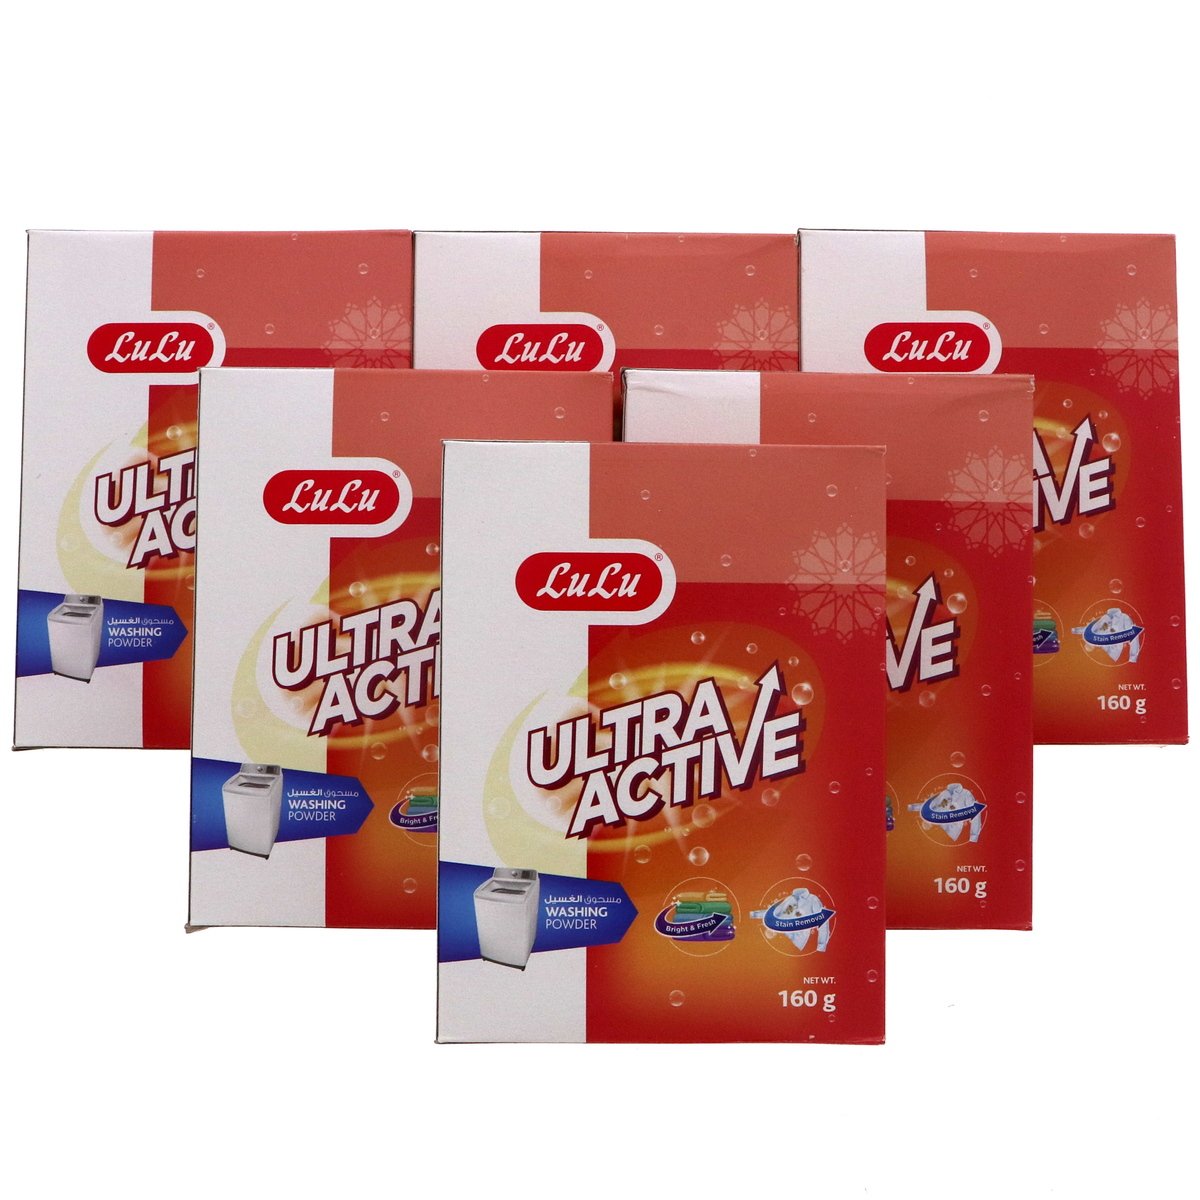 LuLu Ultra Active Top Load Washing Powder 6 x 160g